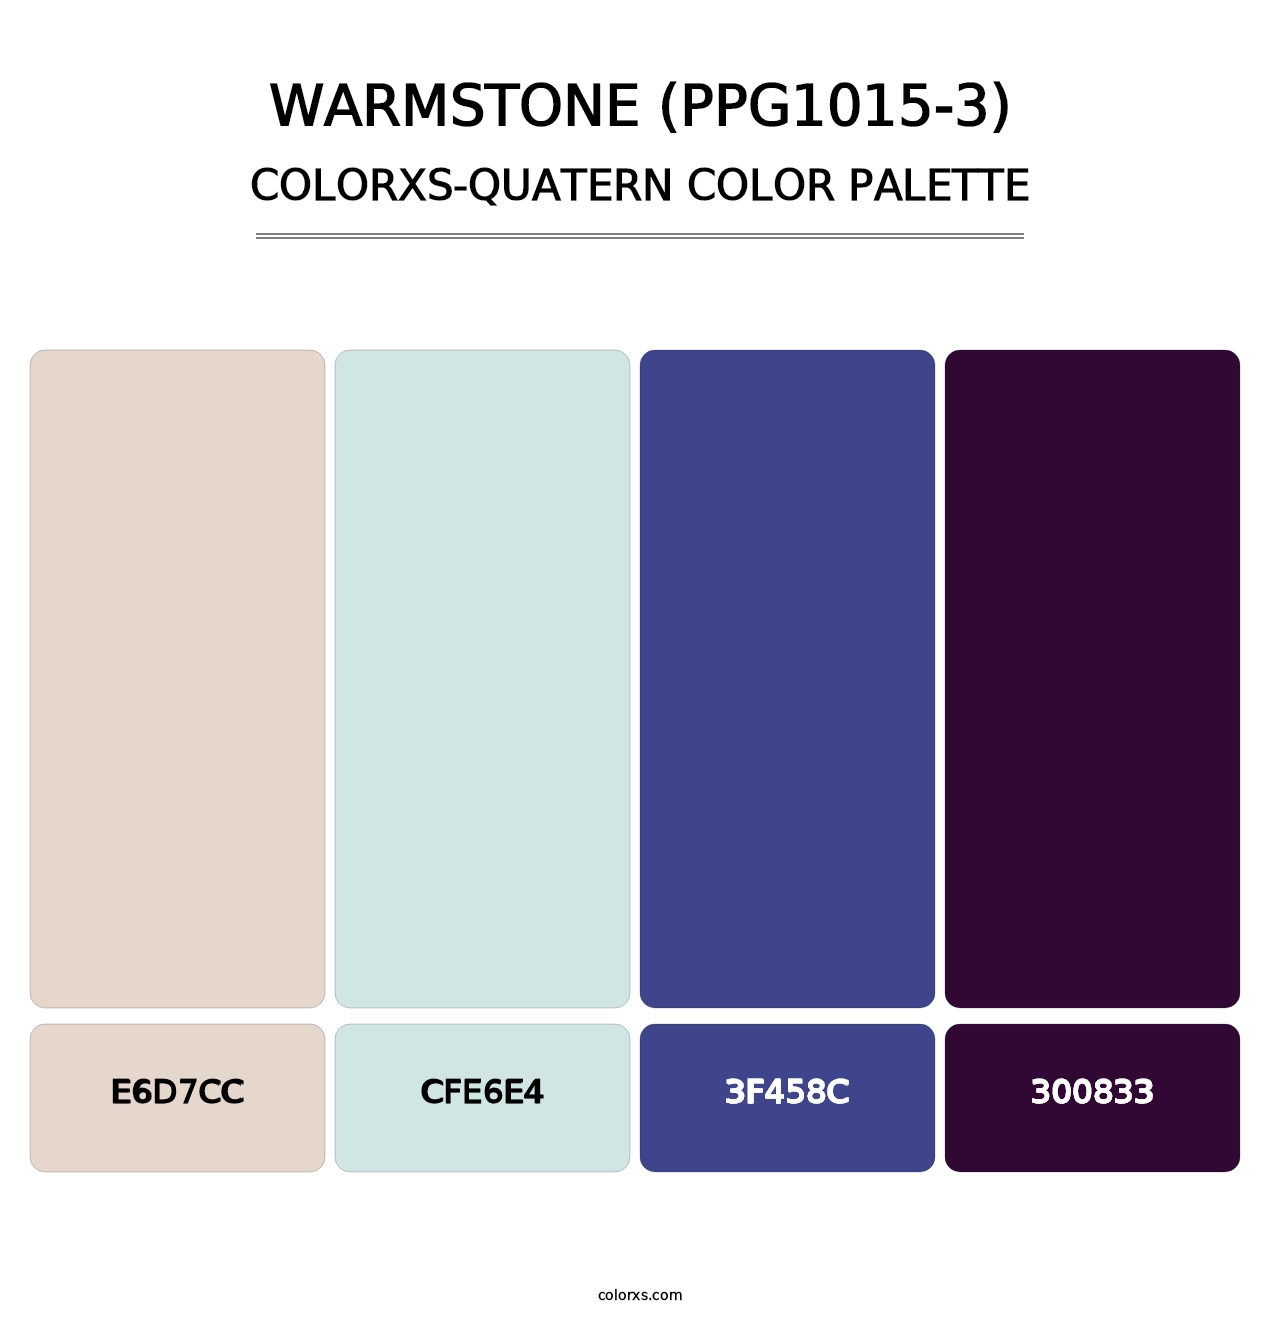 Warmstone (PPG1015-3) - Colorxs Quatern Palette